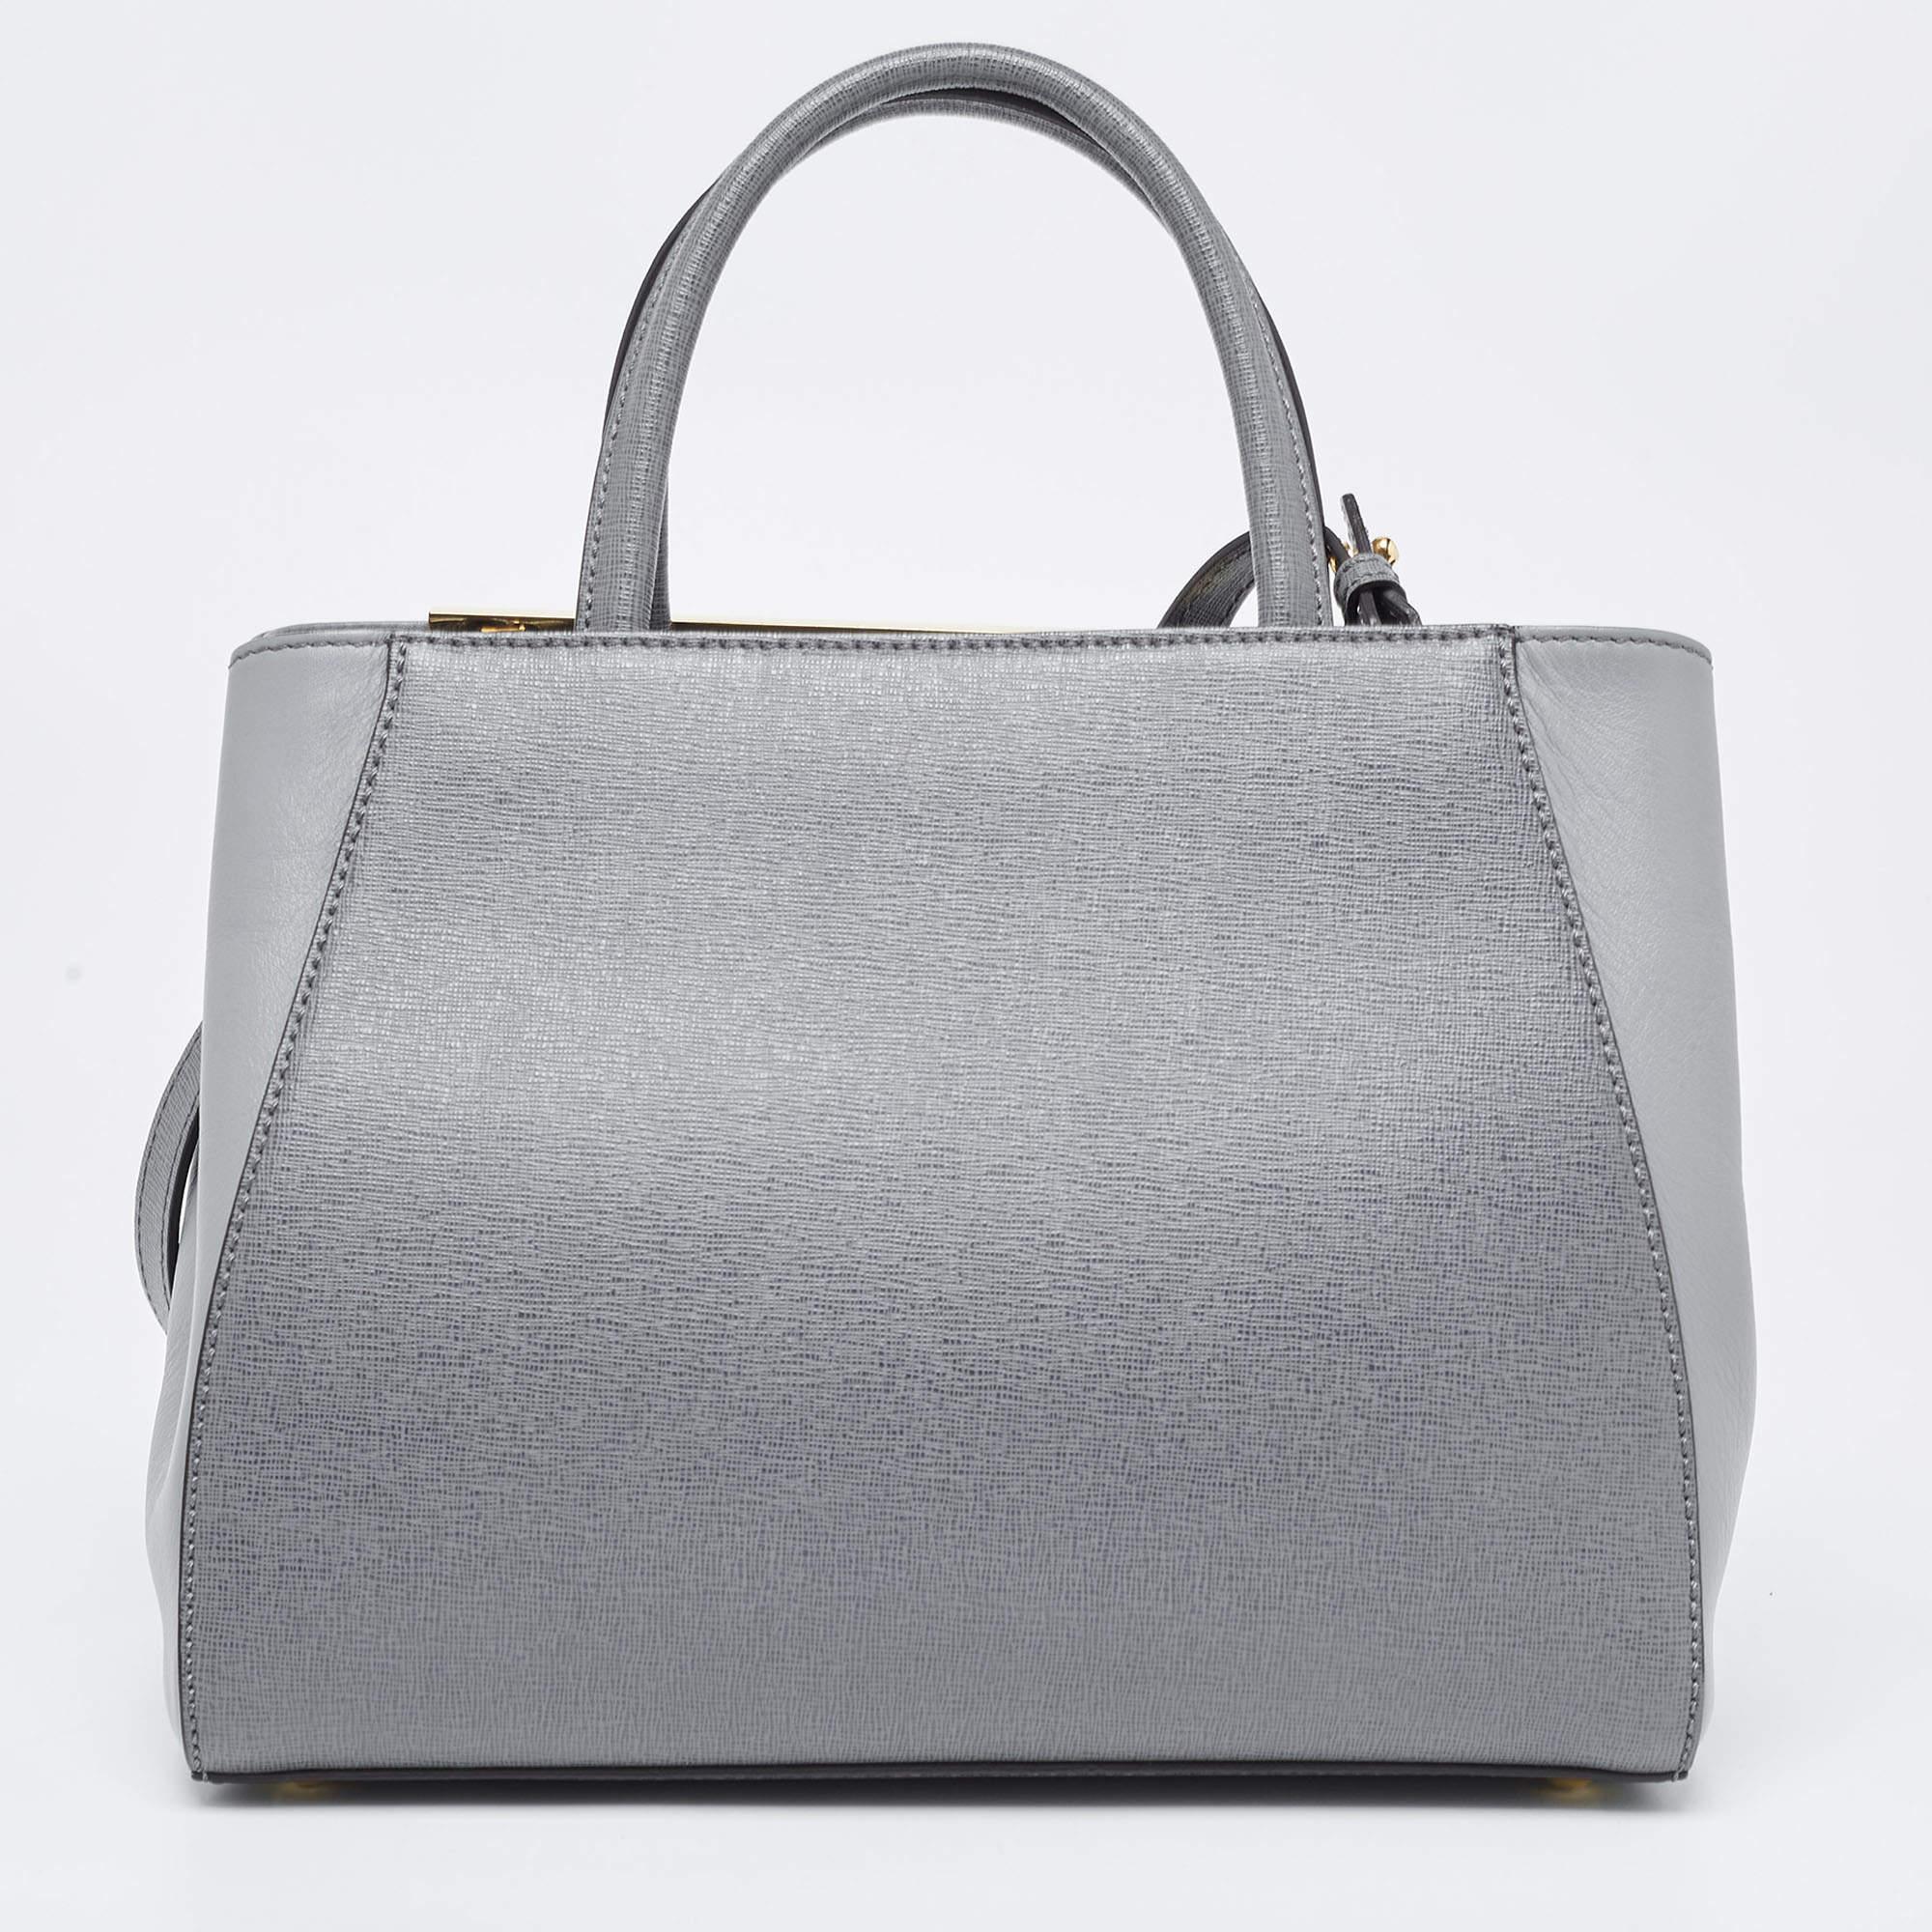 Fendi Grey Leather Mini 2Jours Tote For Sale 7